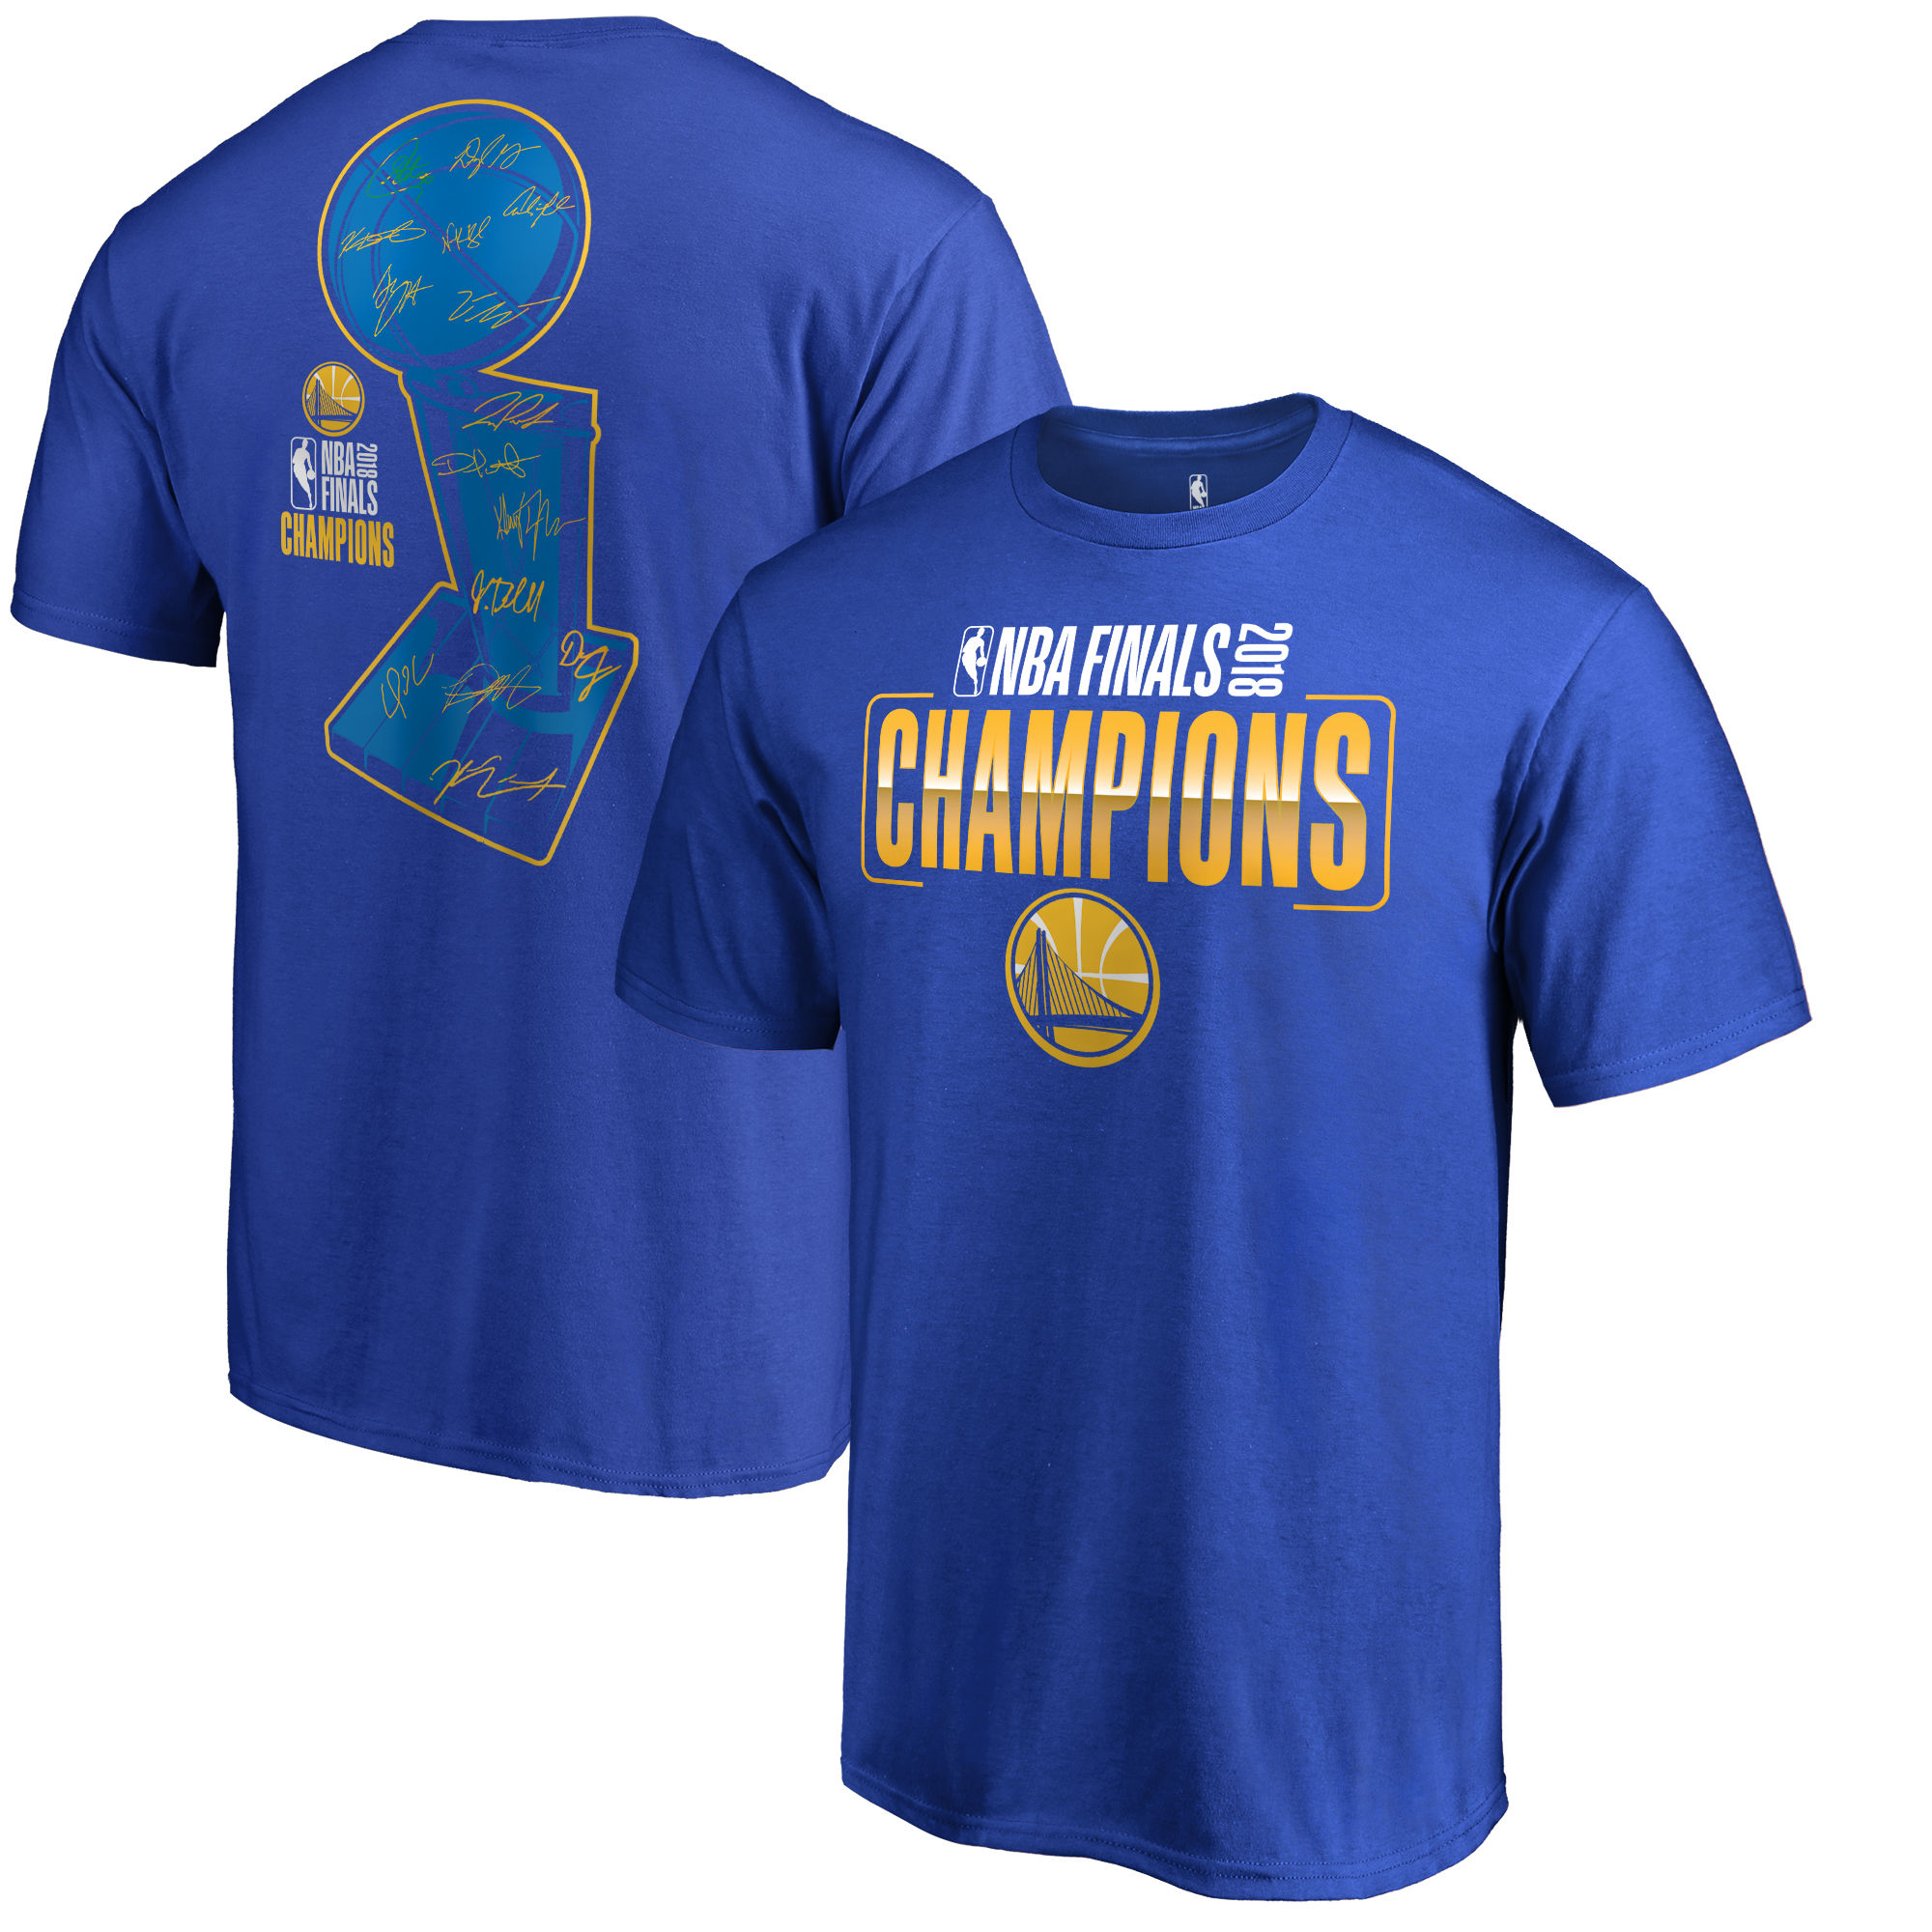 Golden State Warriors Fanatics Branded 2018 NBA Finals Champions Must Have Skillz Trophy Signature T-Shirt Royal